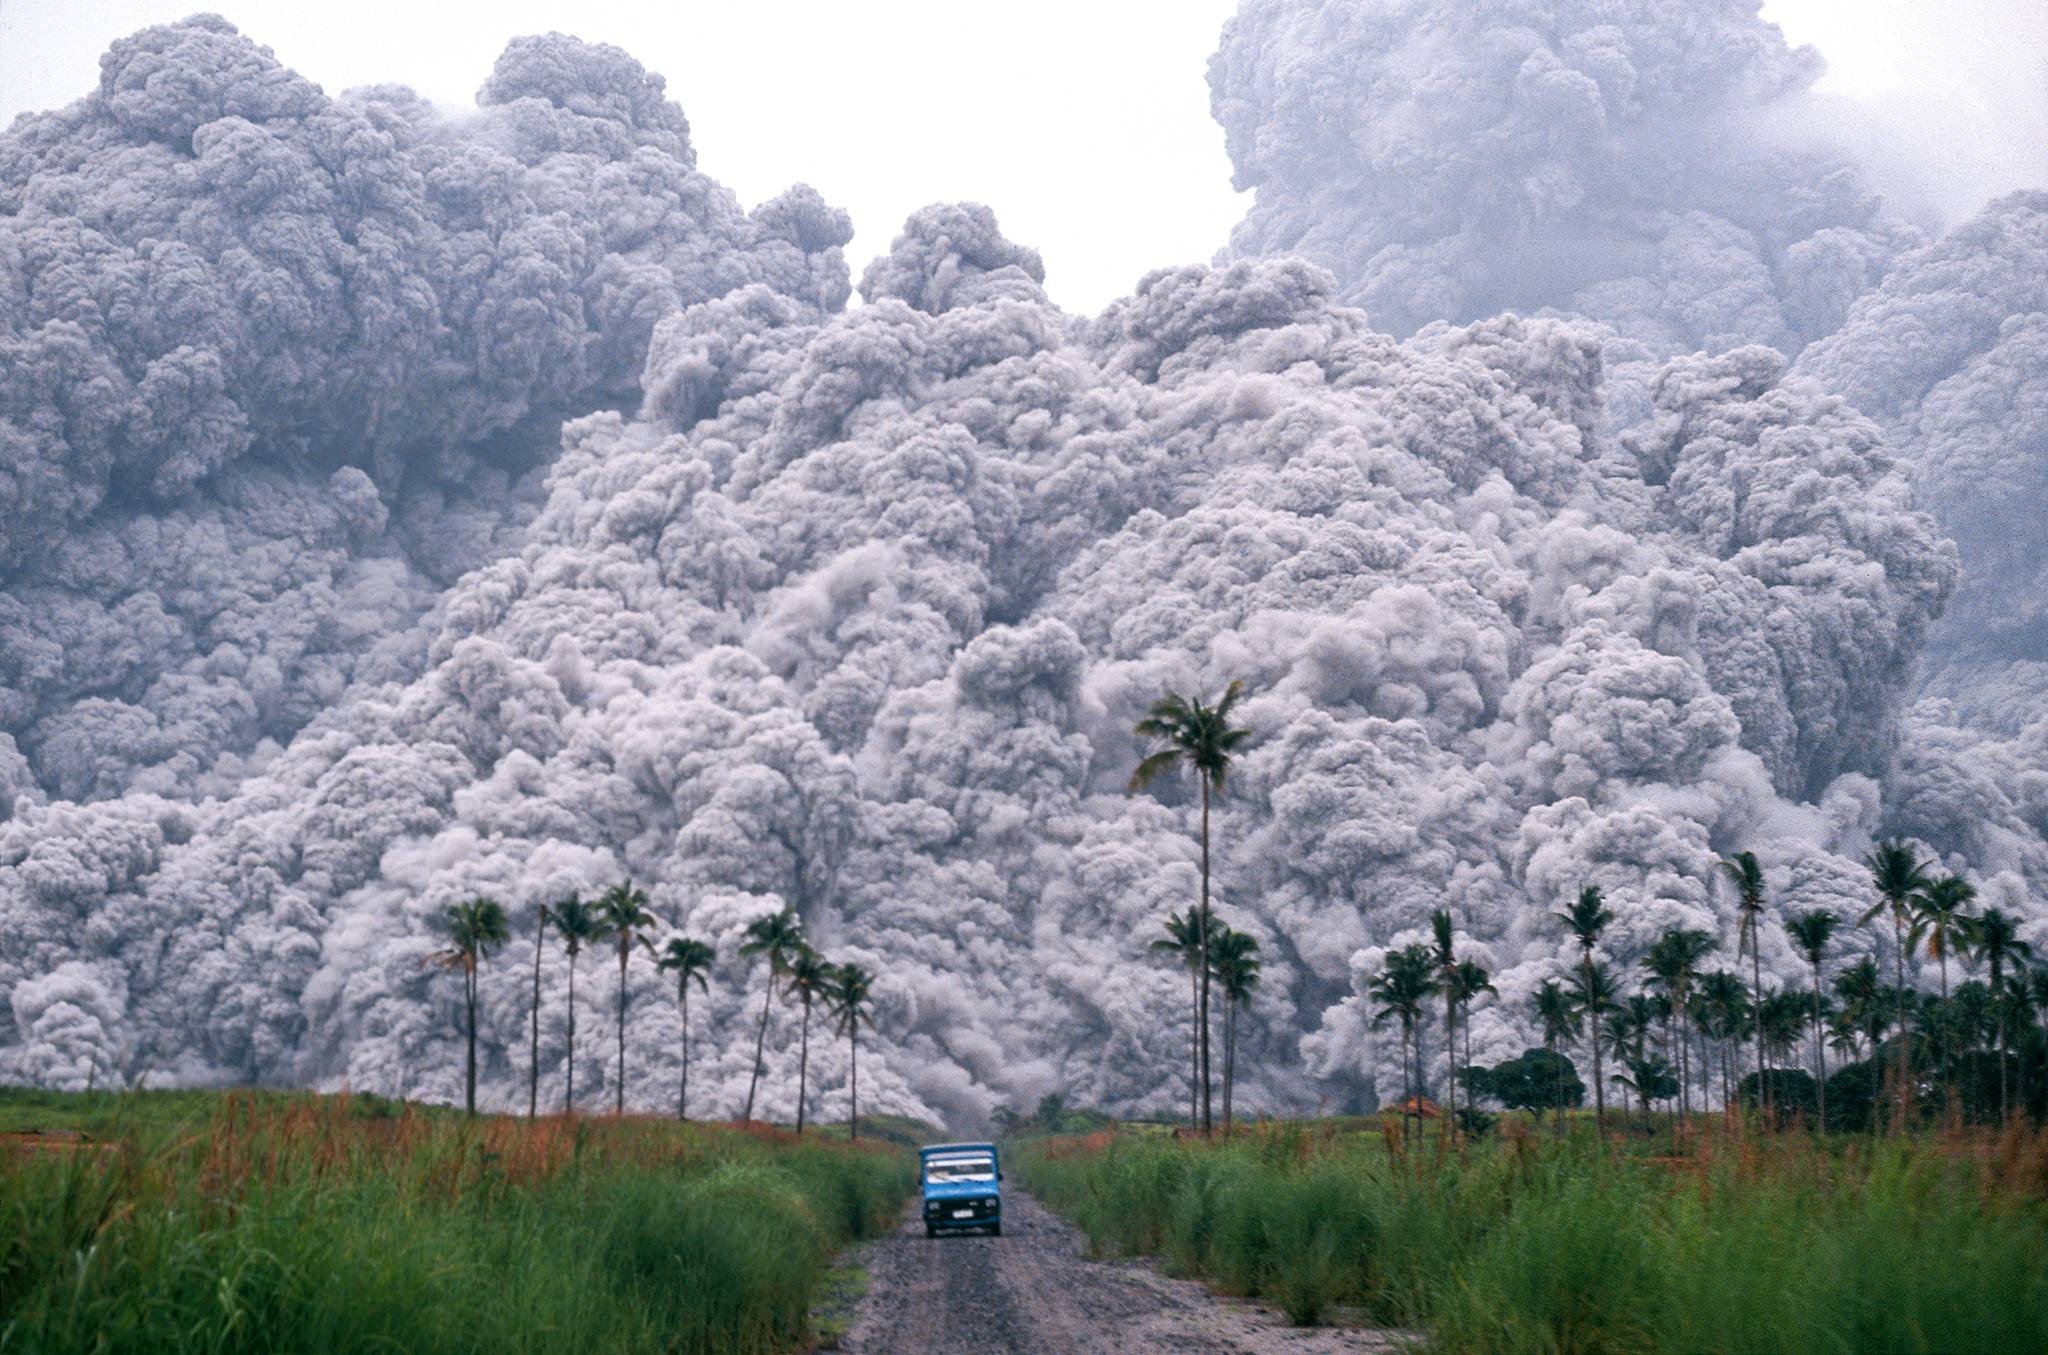 General 2048x1355 volcano dust eruptions landscape dirt road volcanic eruption car blue cars nature road